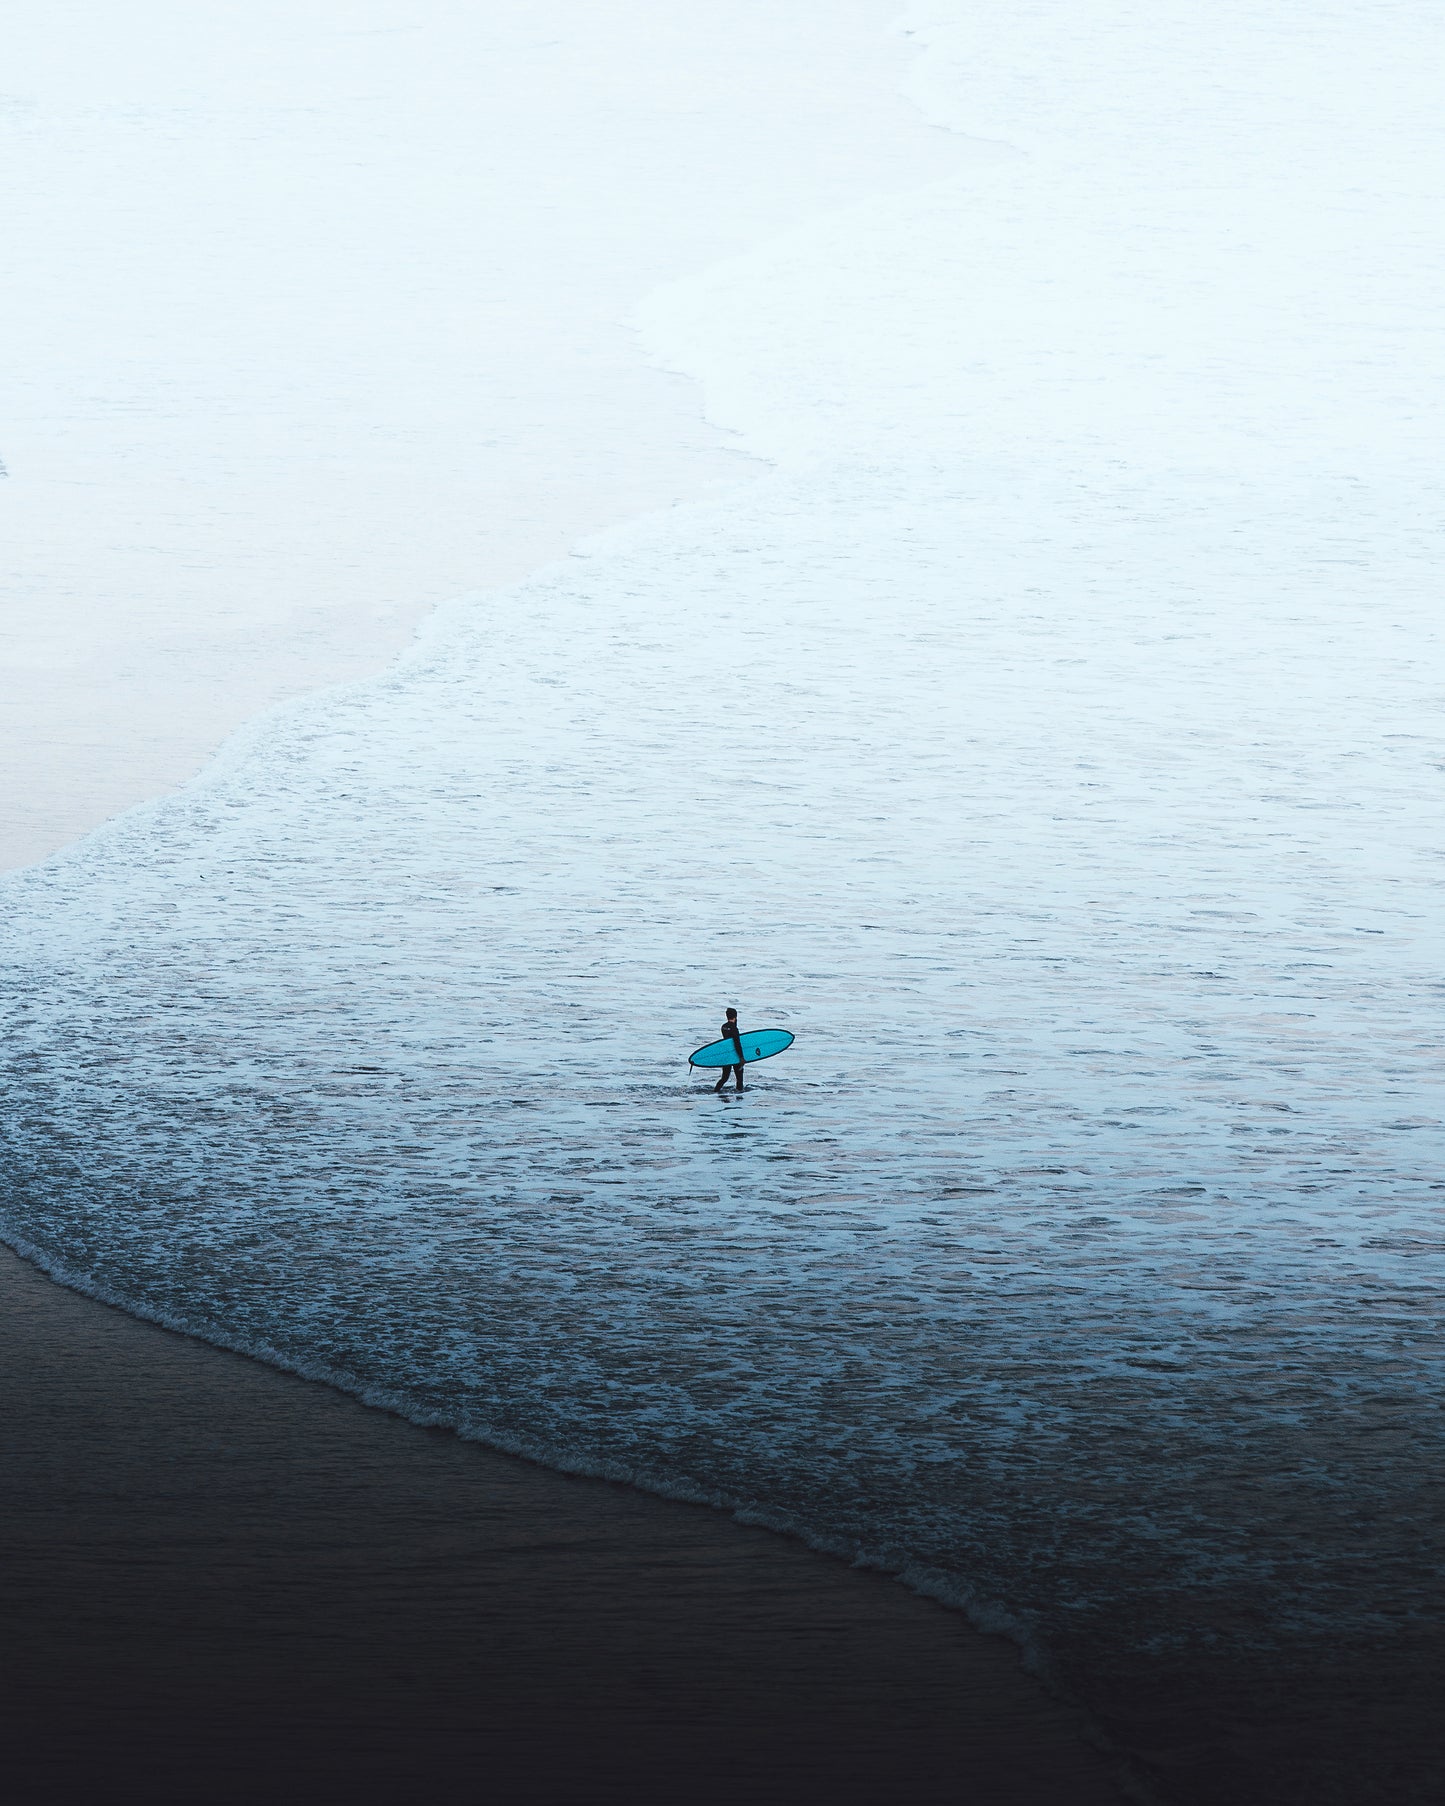 Lone surfer